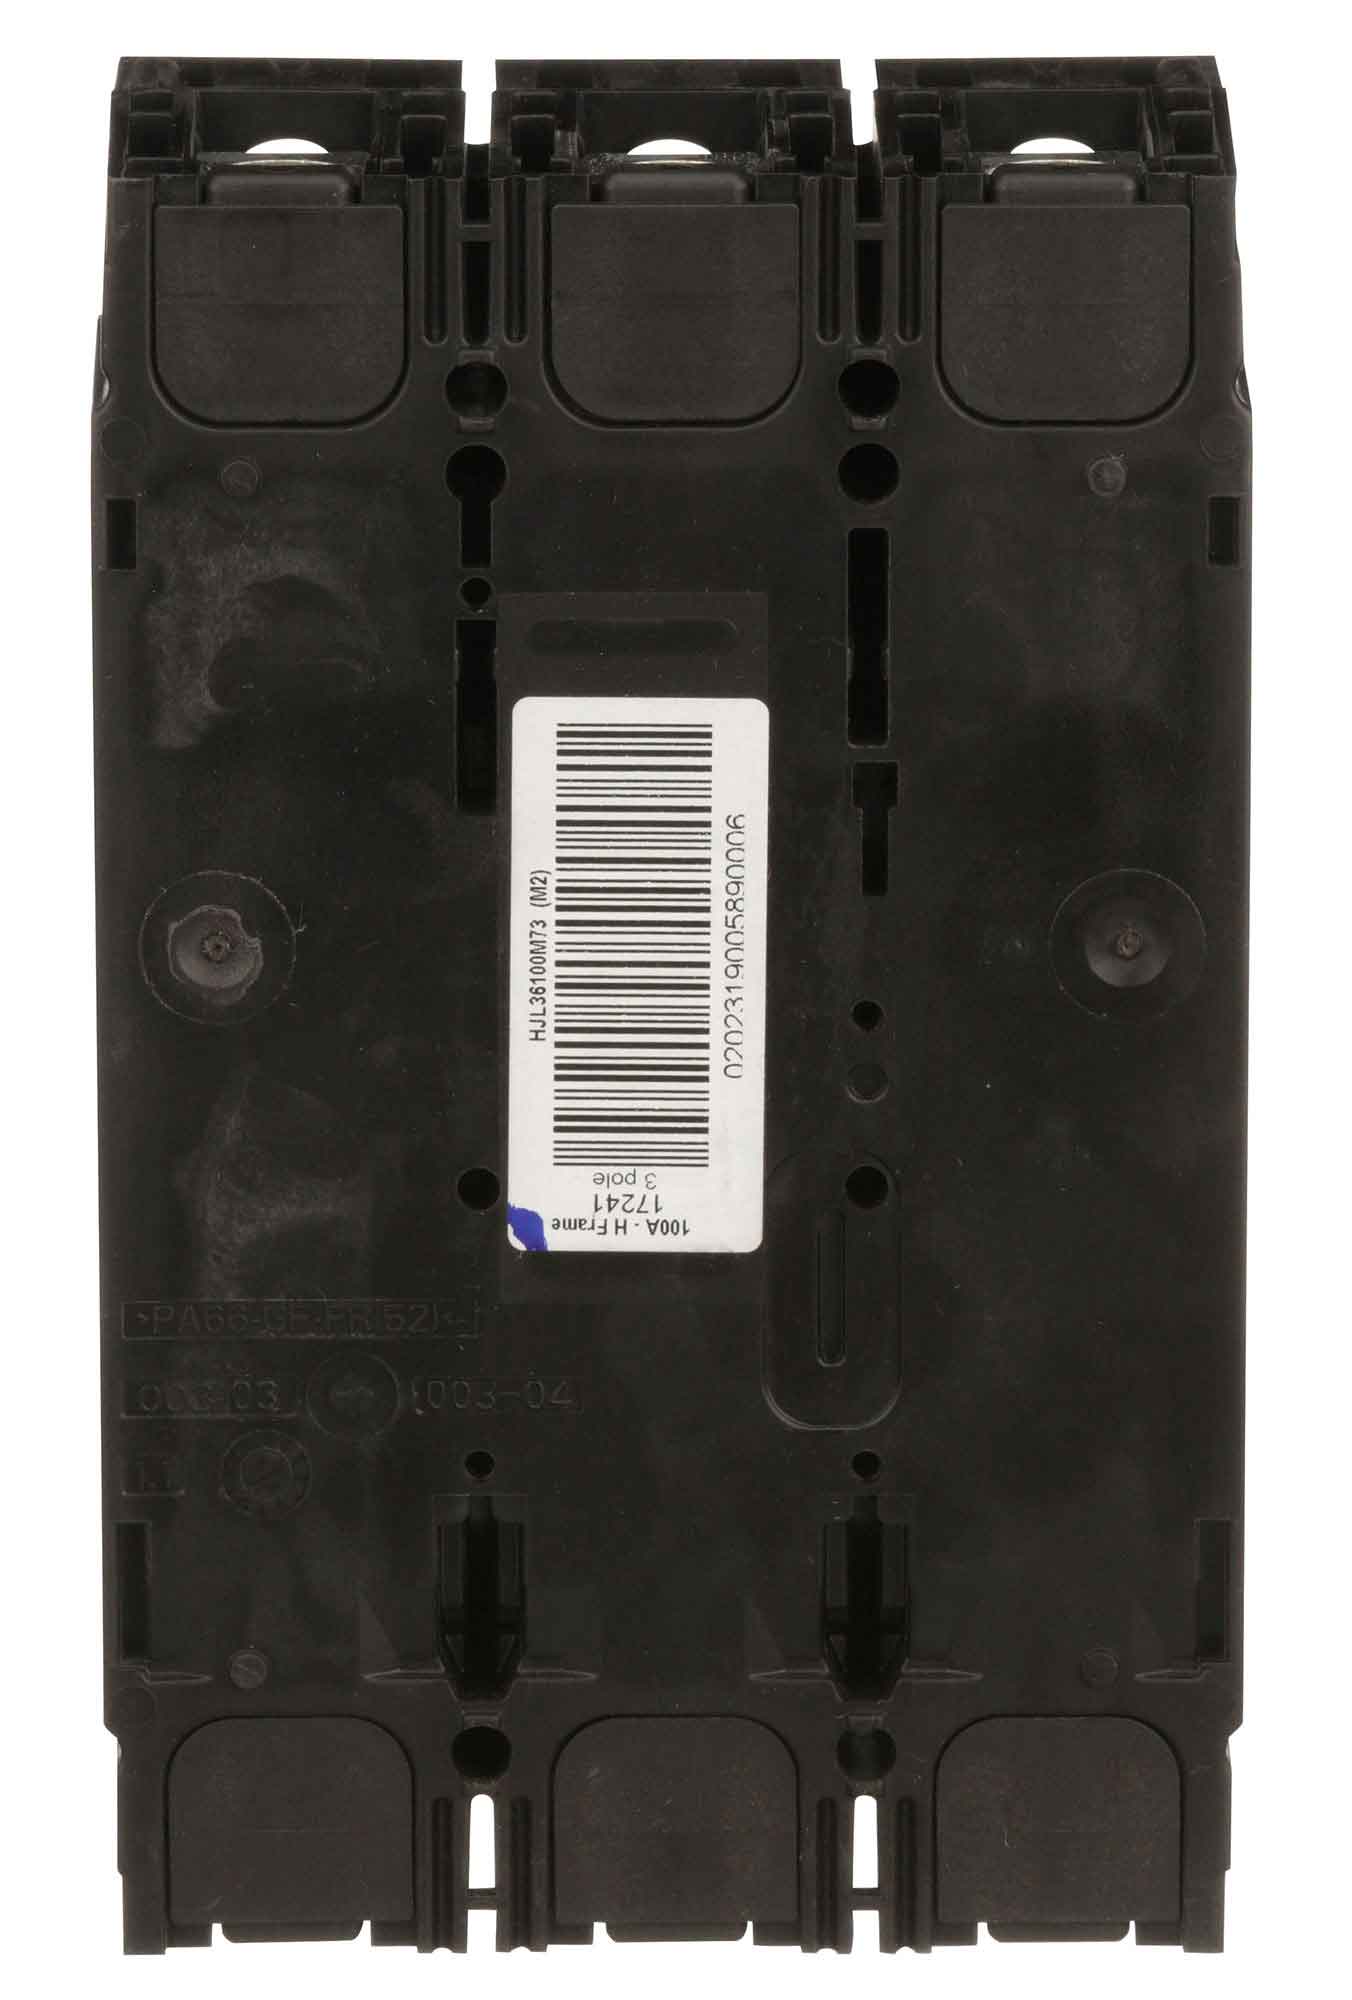 HJL36100M73 - Square D - Molded Case Circuit Breaker